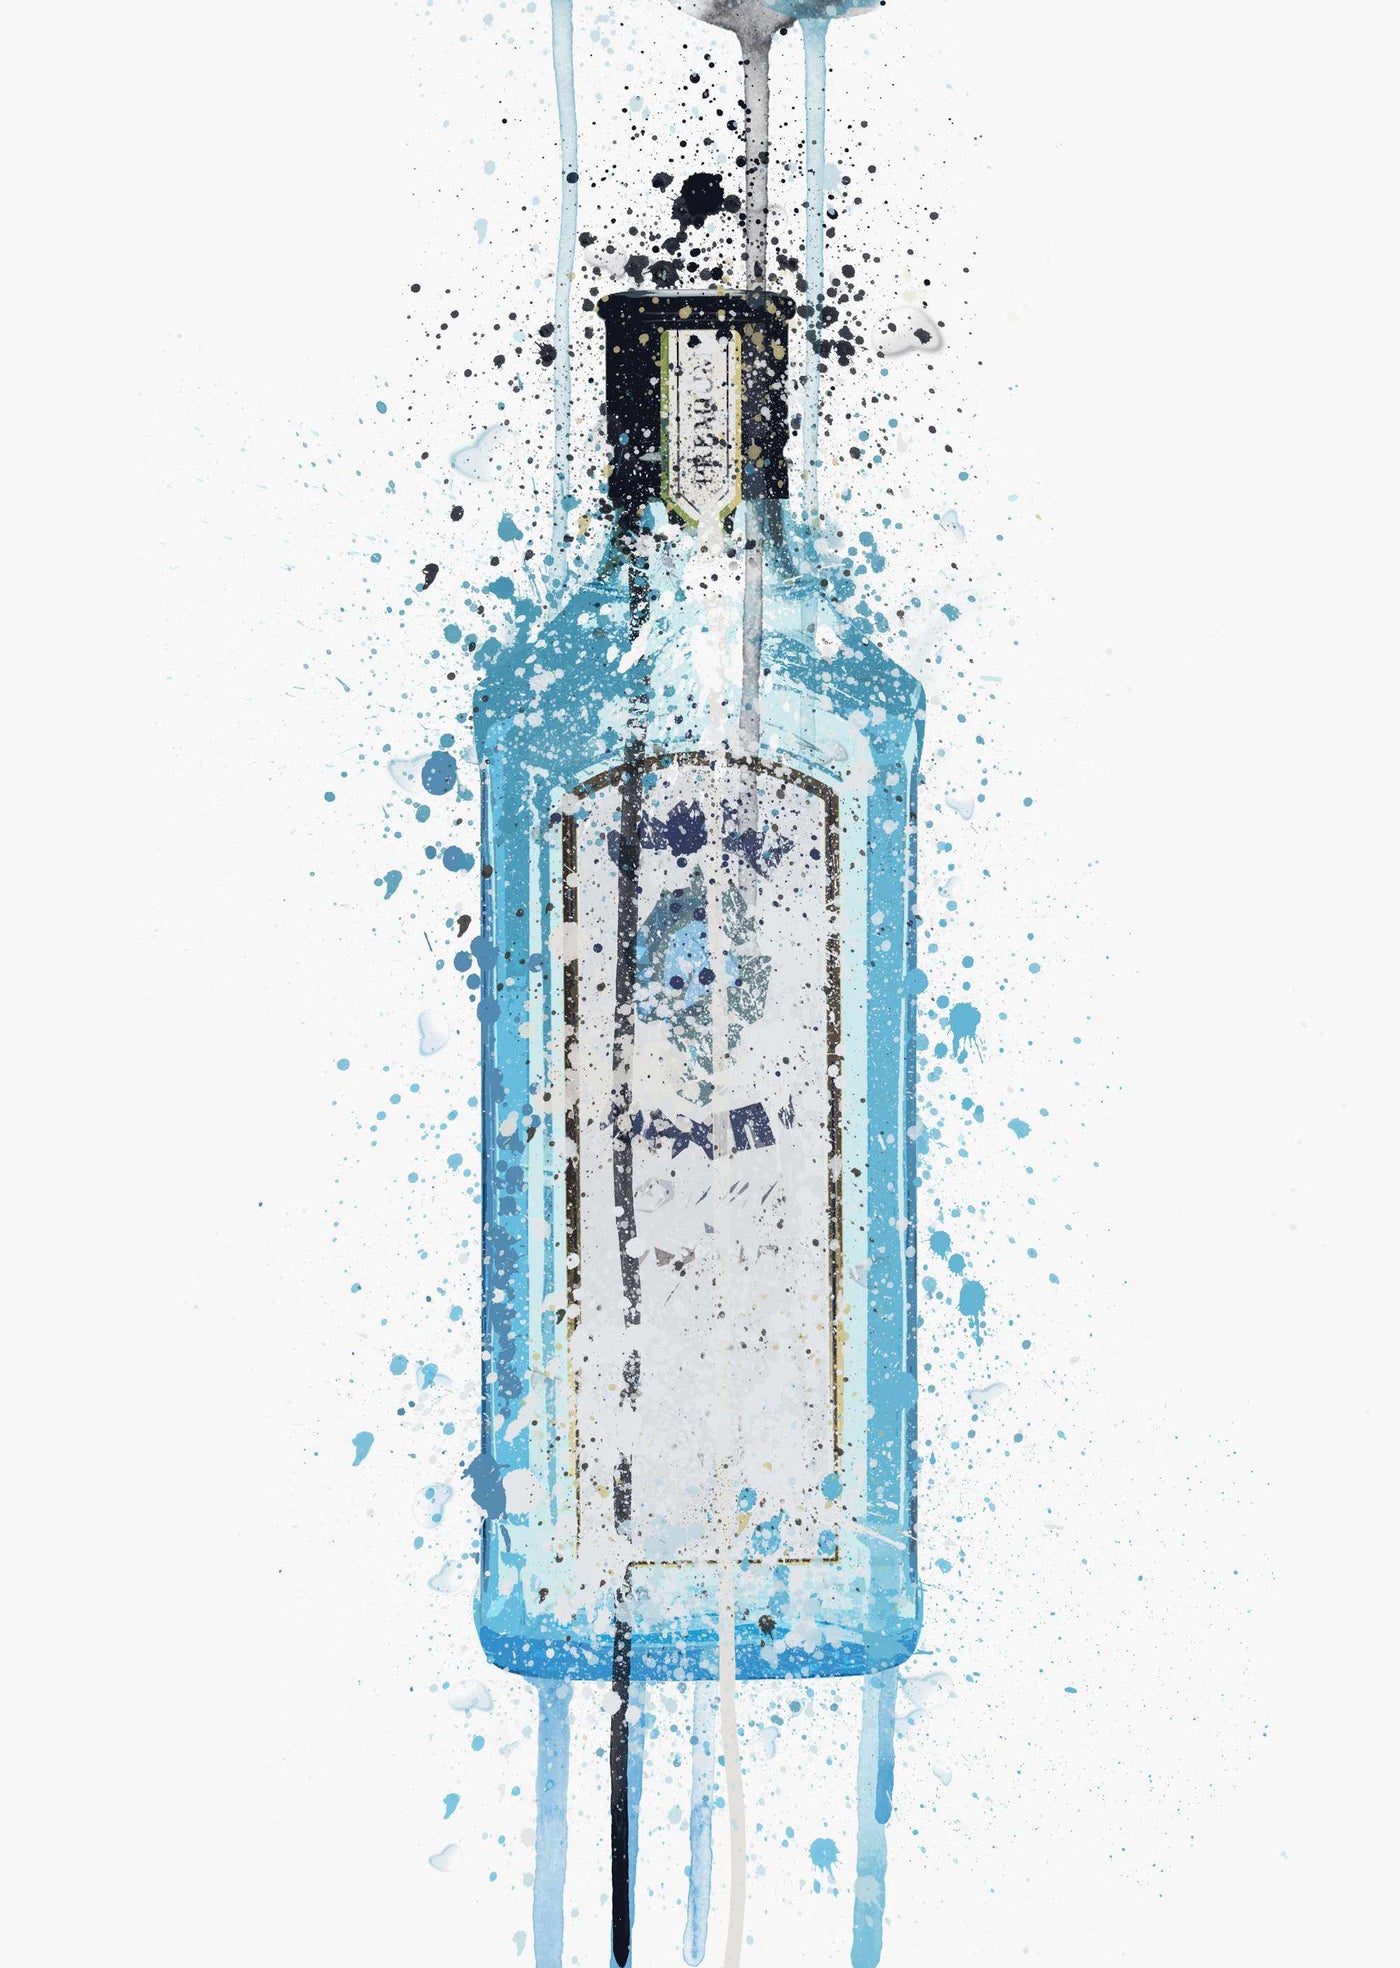 Gin Bottle Wall Art Print 'Ocean Blue'-We Love Prints